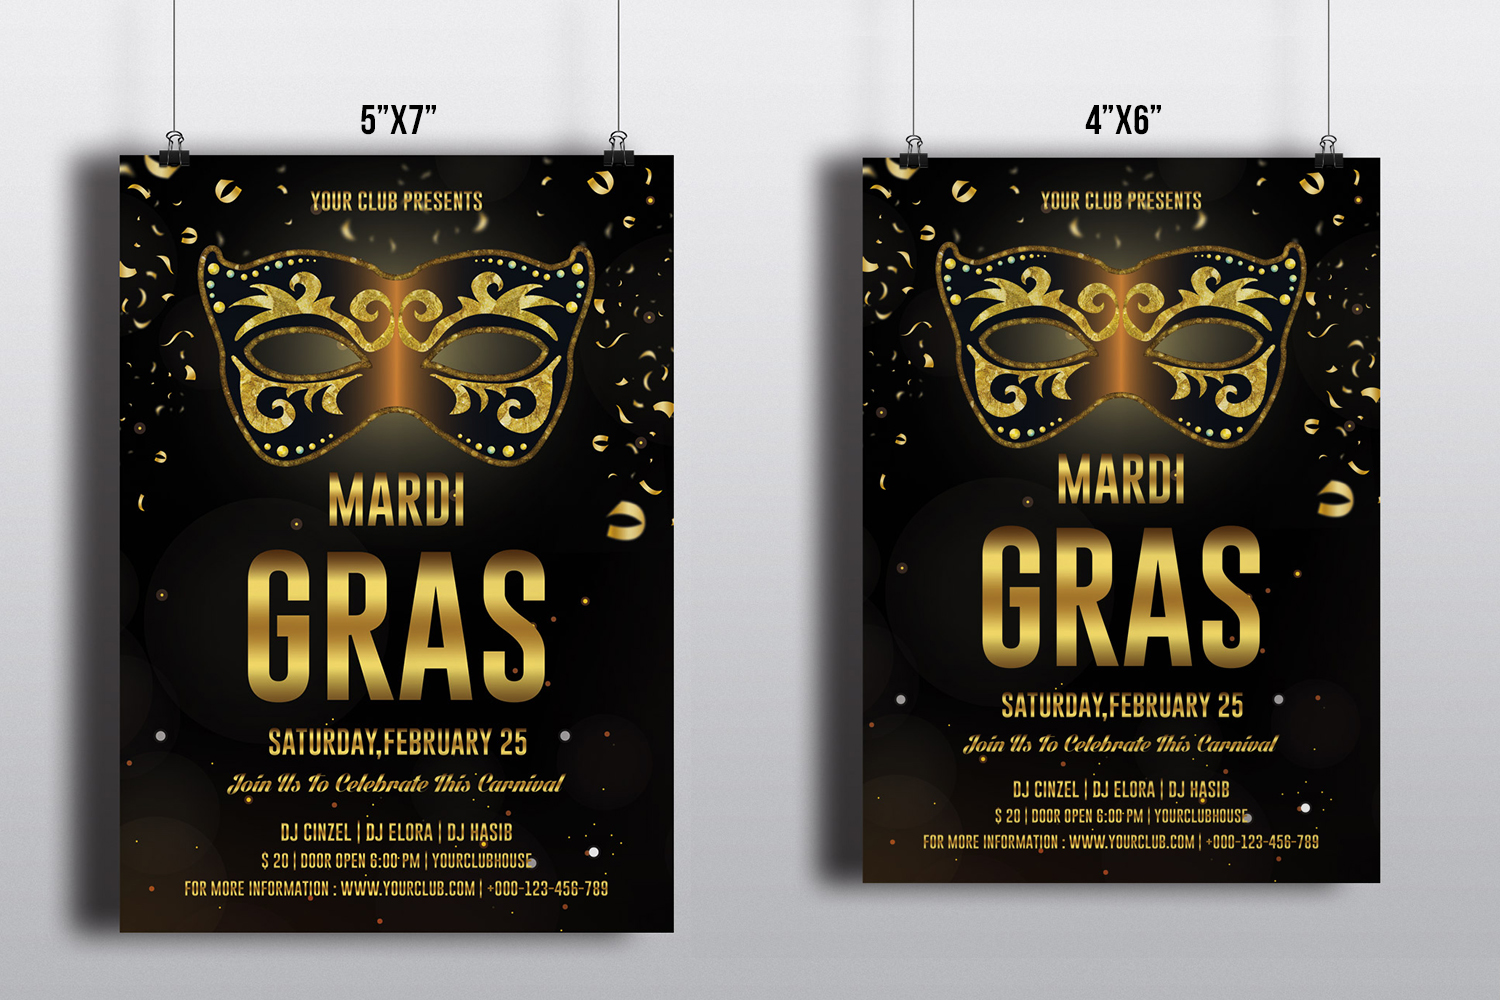 Mardi Gras Party Flyer - Corporate Identity Template